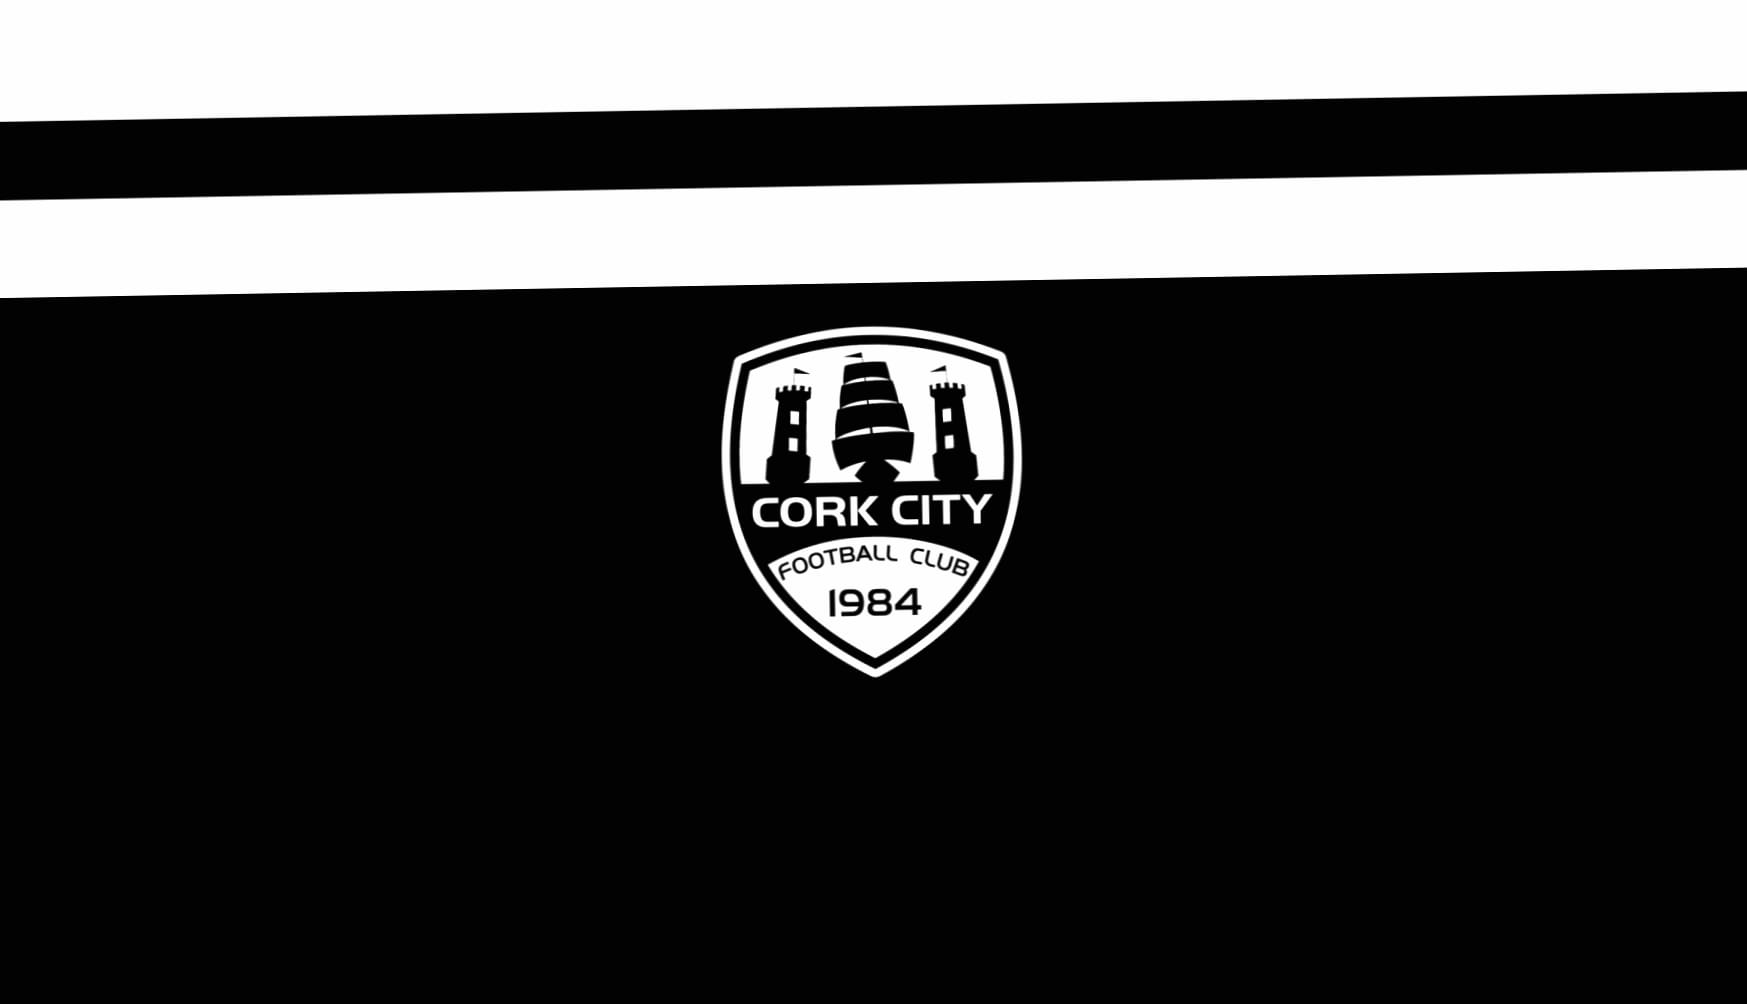 Cork City F.C at 2048 x 2048 iPad size wallpapers HD quality